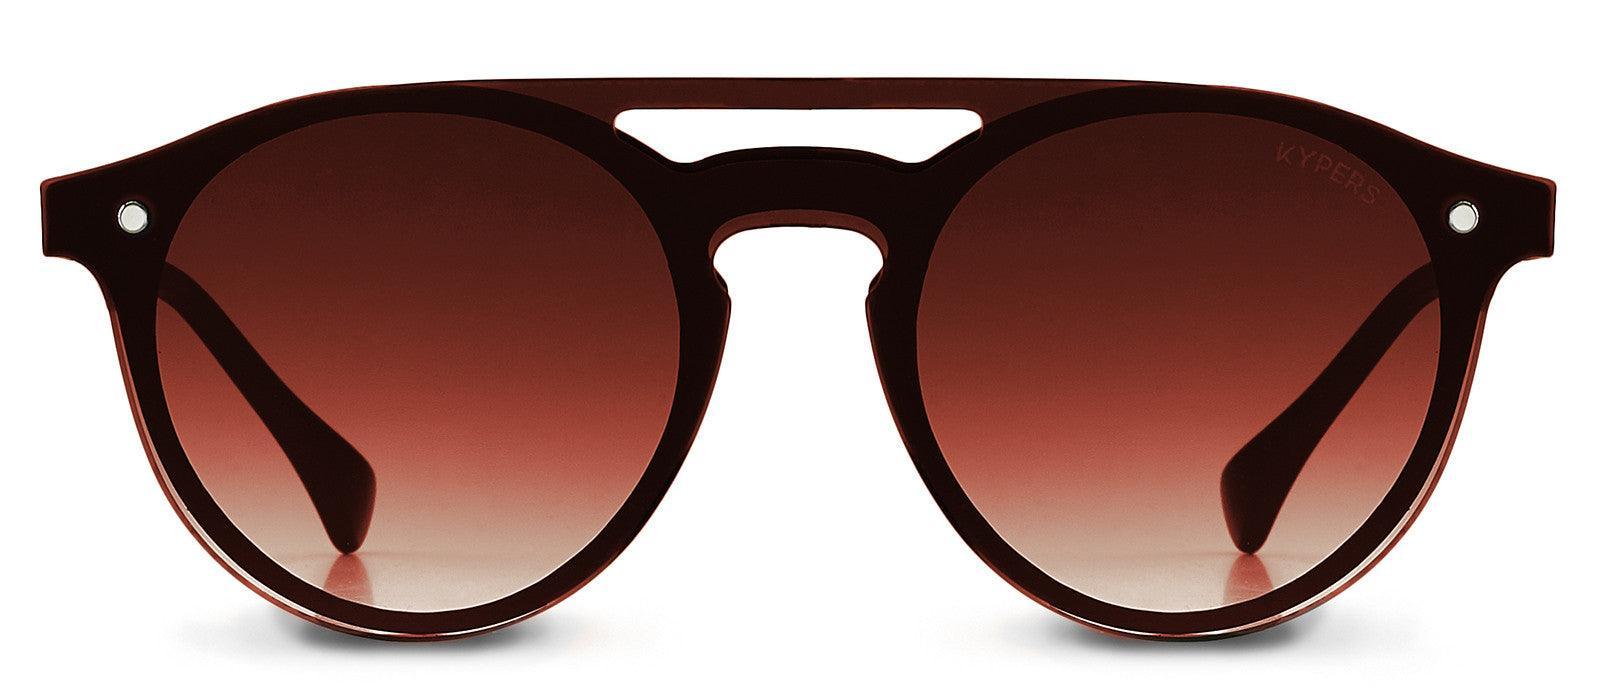 KYPERS sunglasses model GERI GR001 with black frame and gradient brown lens